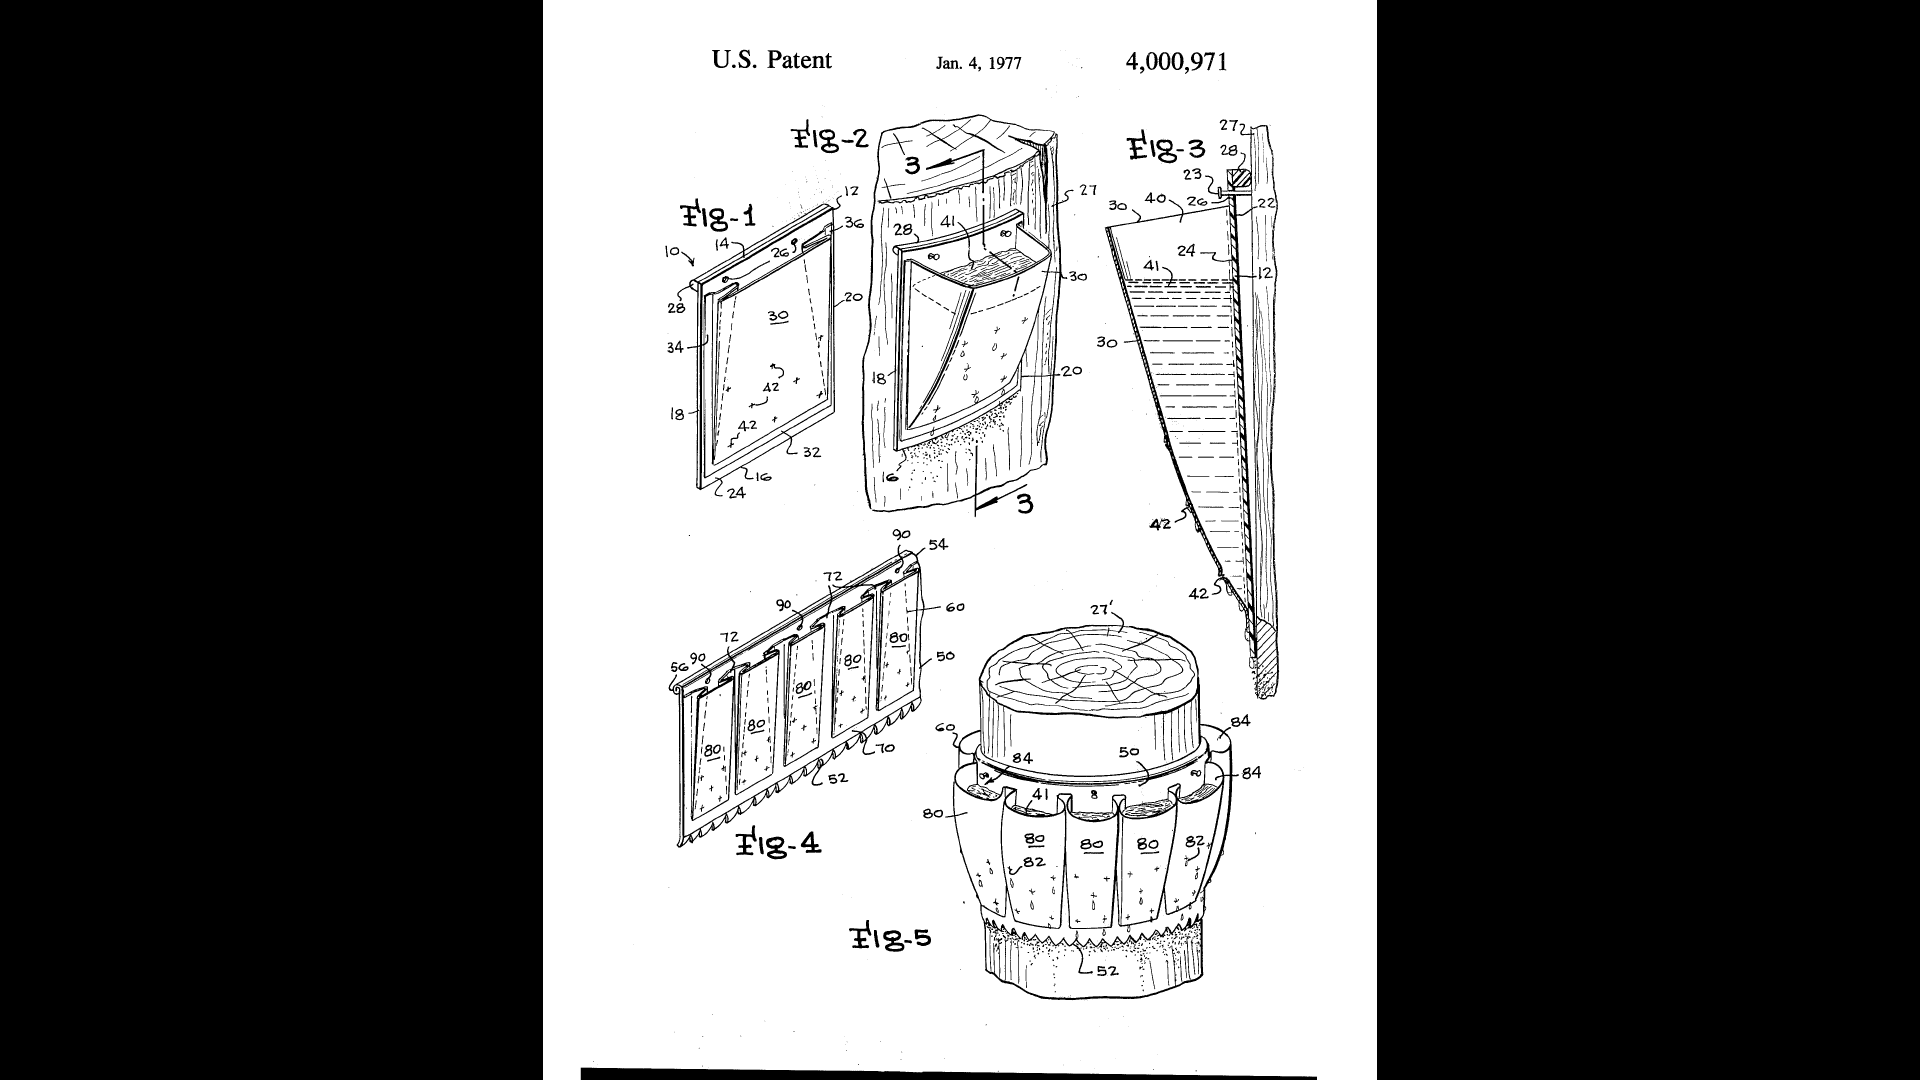 Tom Gaskins Patent No. 4,000,971